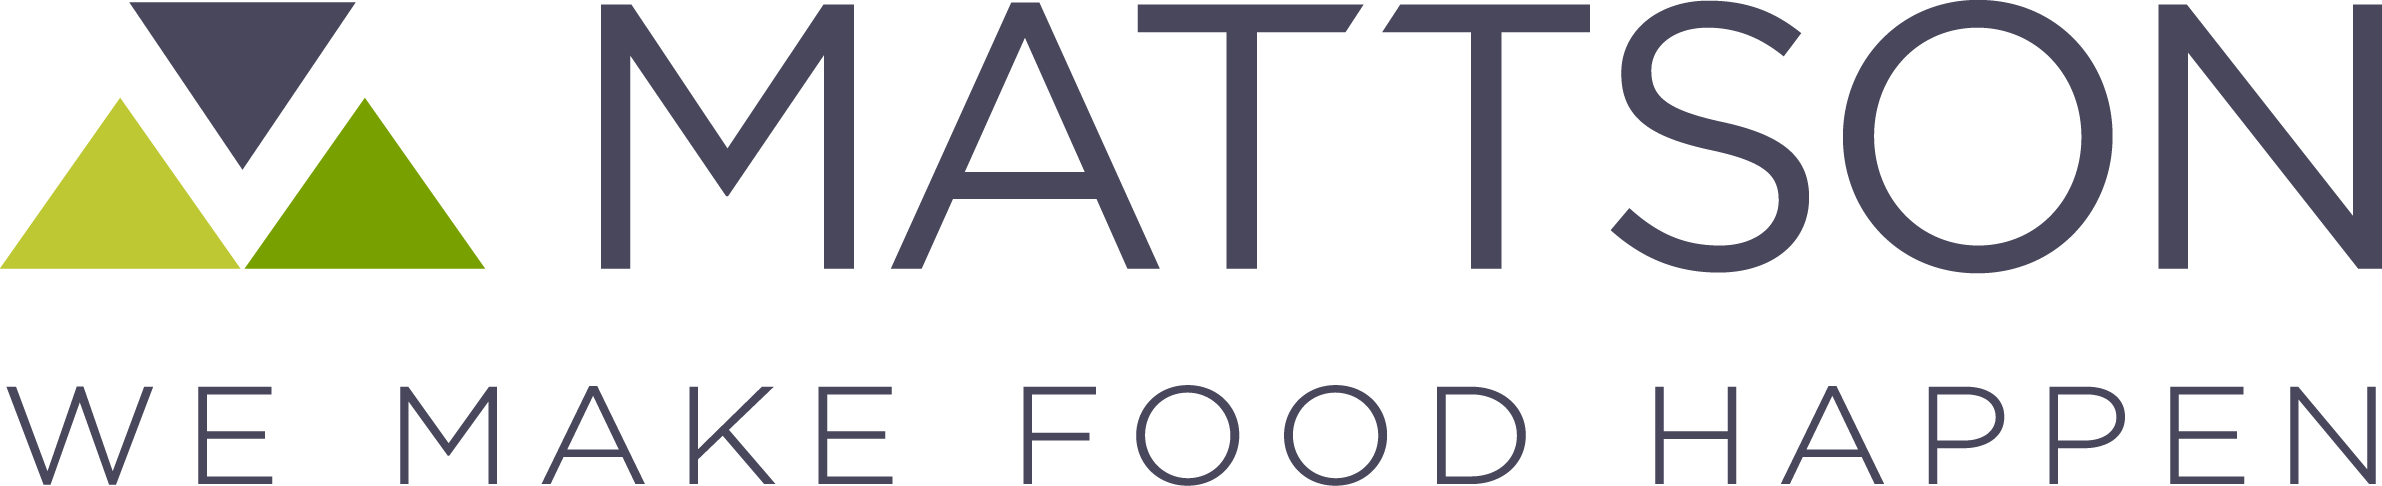 Mattson logo